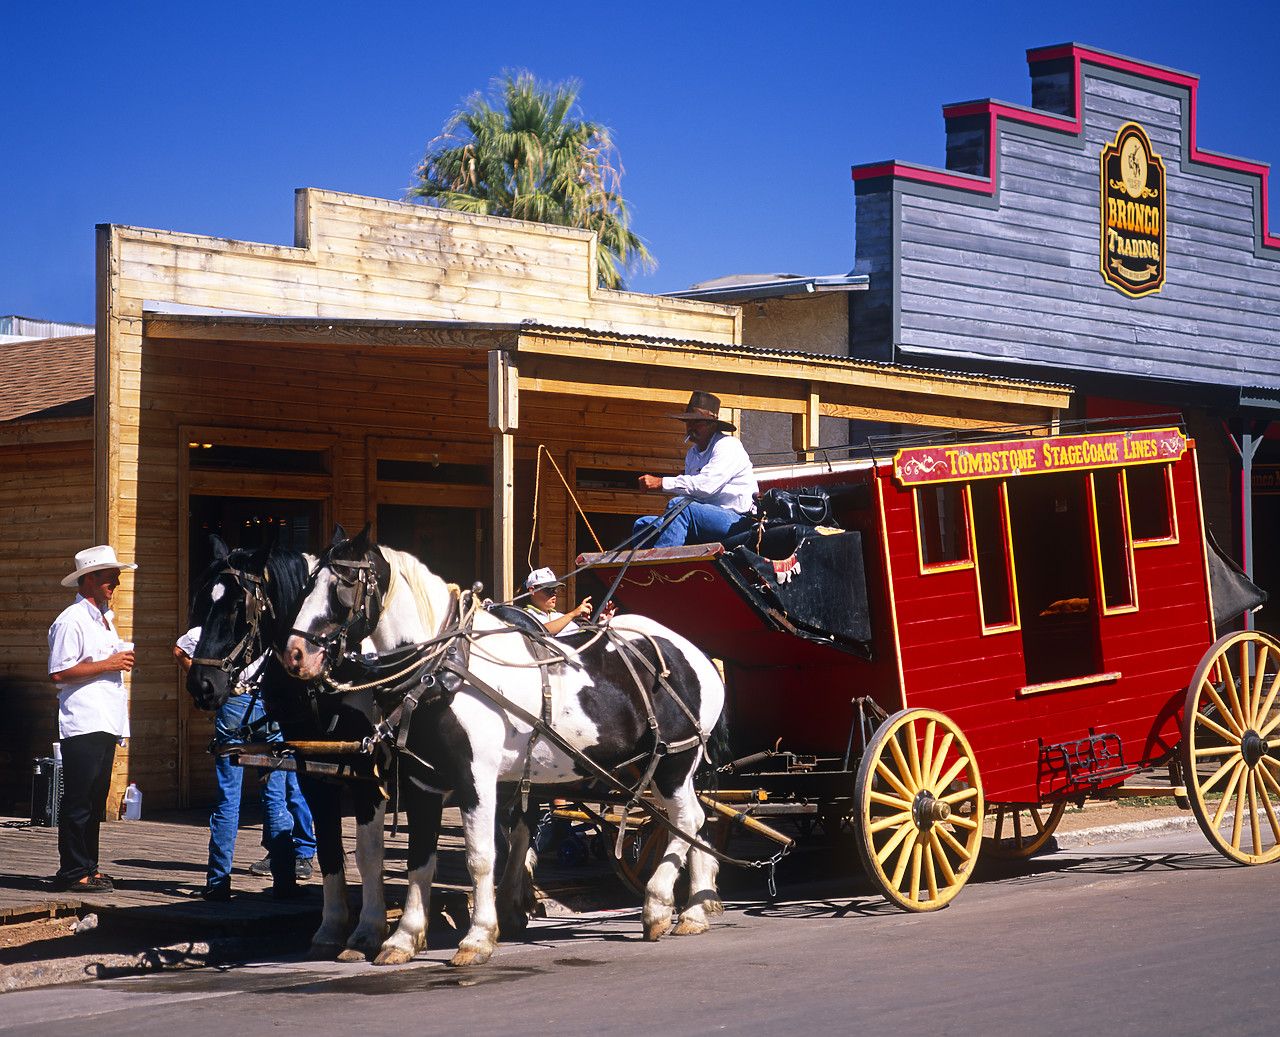 #990727-1 - Tombstone Stagecoach, Arizona, USA